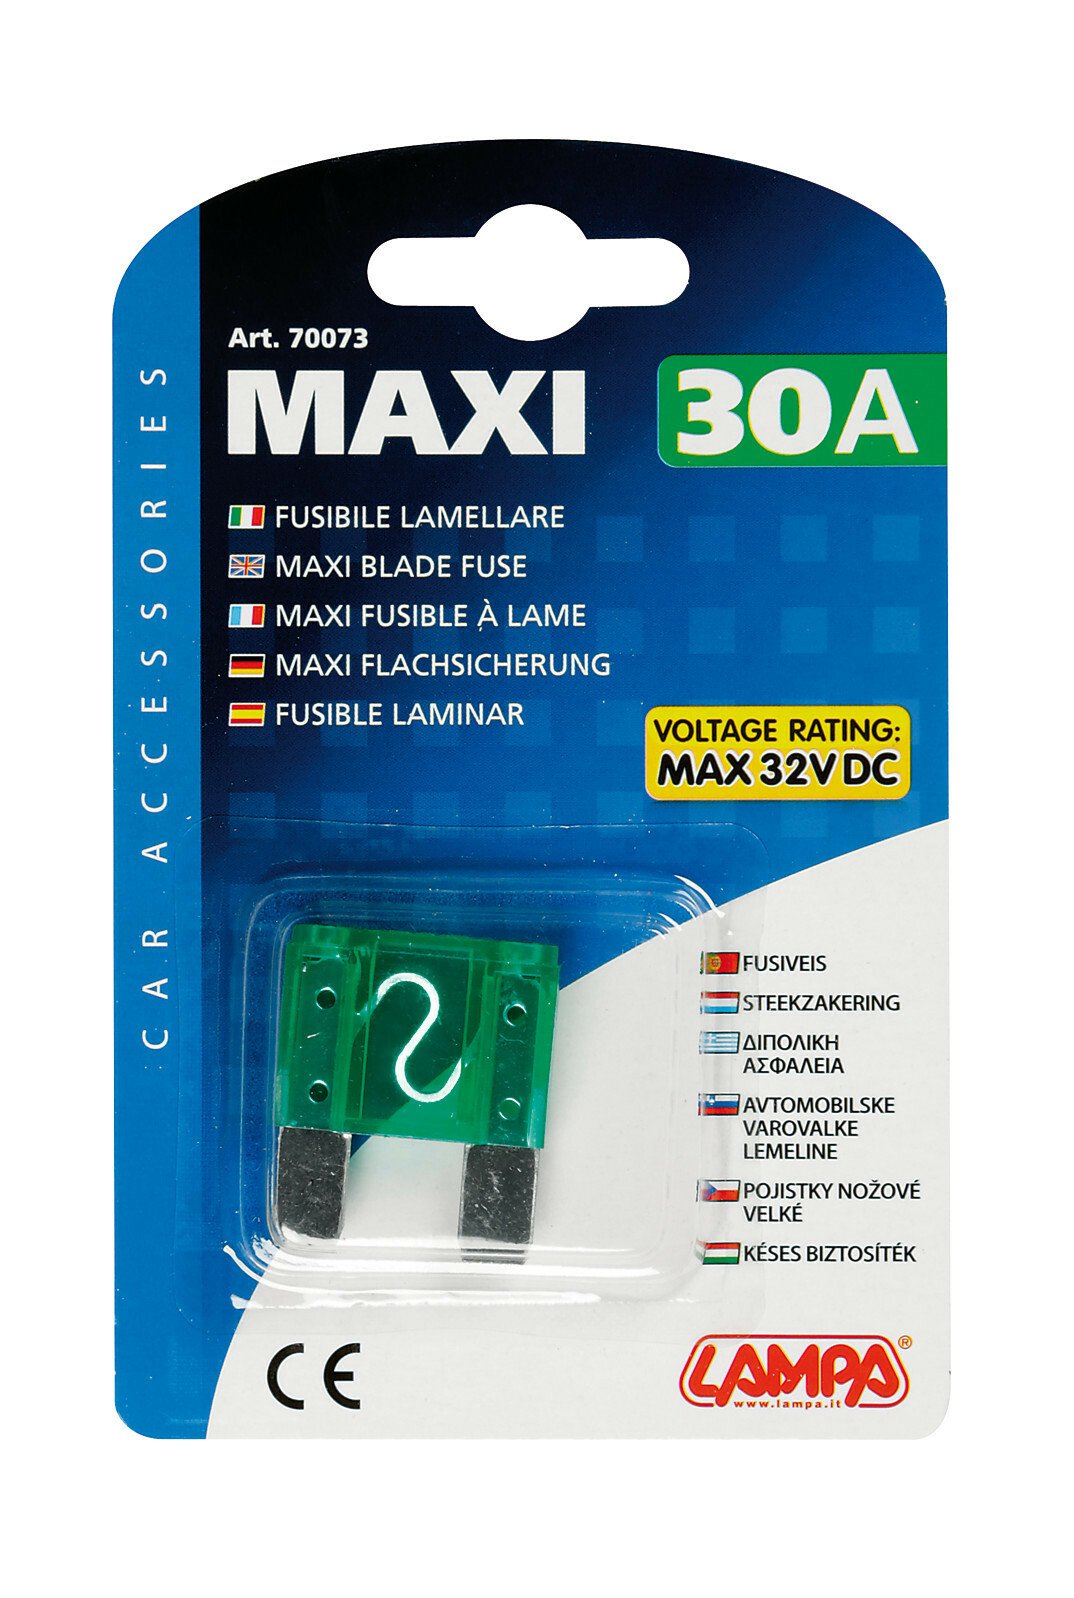 Maxi Blade fuse - 30A thumb